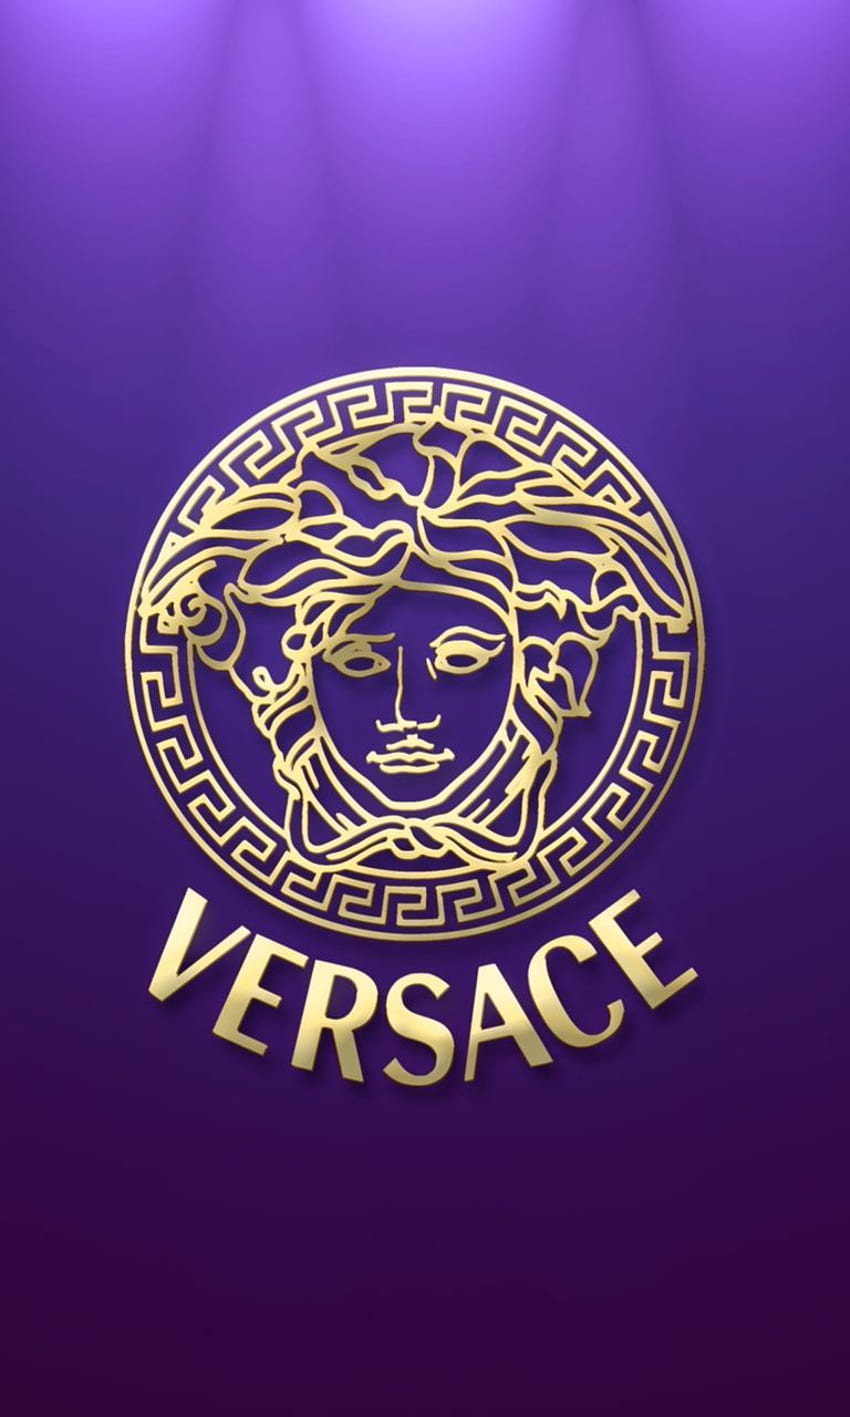 Versace - Fondos de pantalla gratis para . 바탕화면 배경화면, 베르사체, 전자충전화면, Versace 로고 7 HD 전화 배경 화면